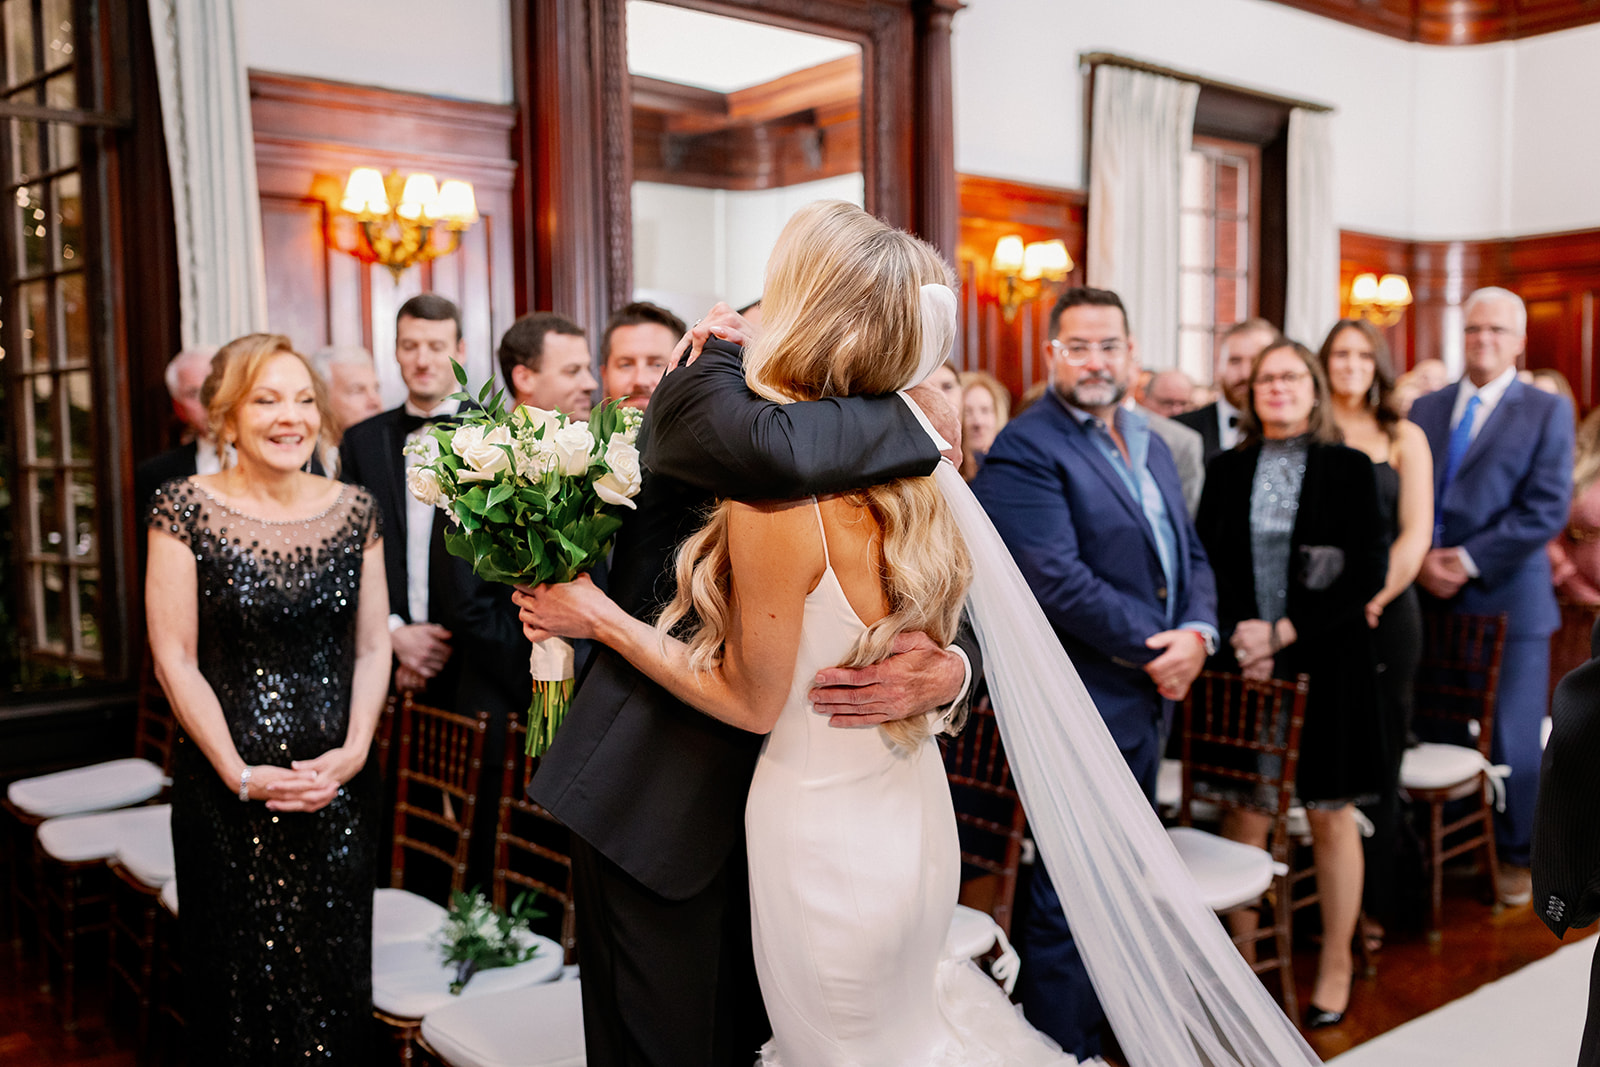 Bride hugging her dad after walking down the  aisle at her Bourne Mansion indoor wedding ceremony.